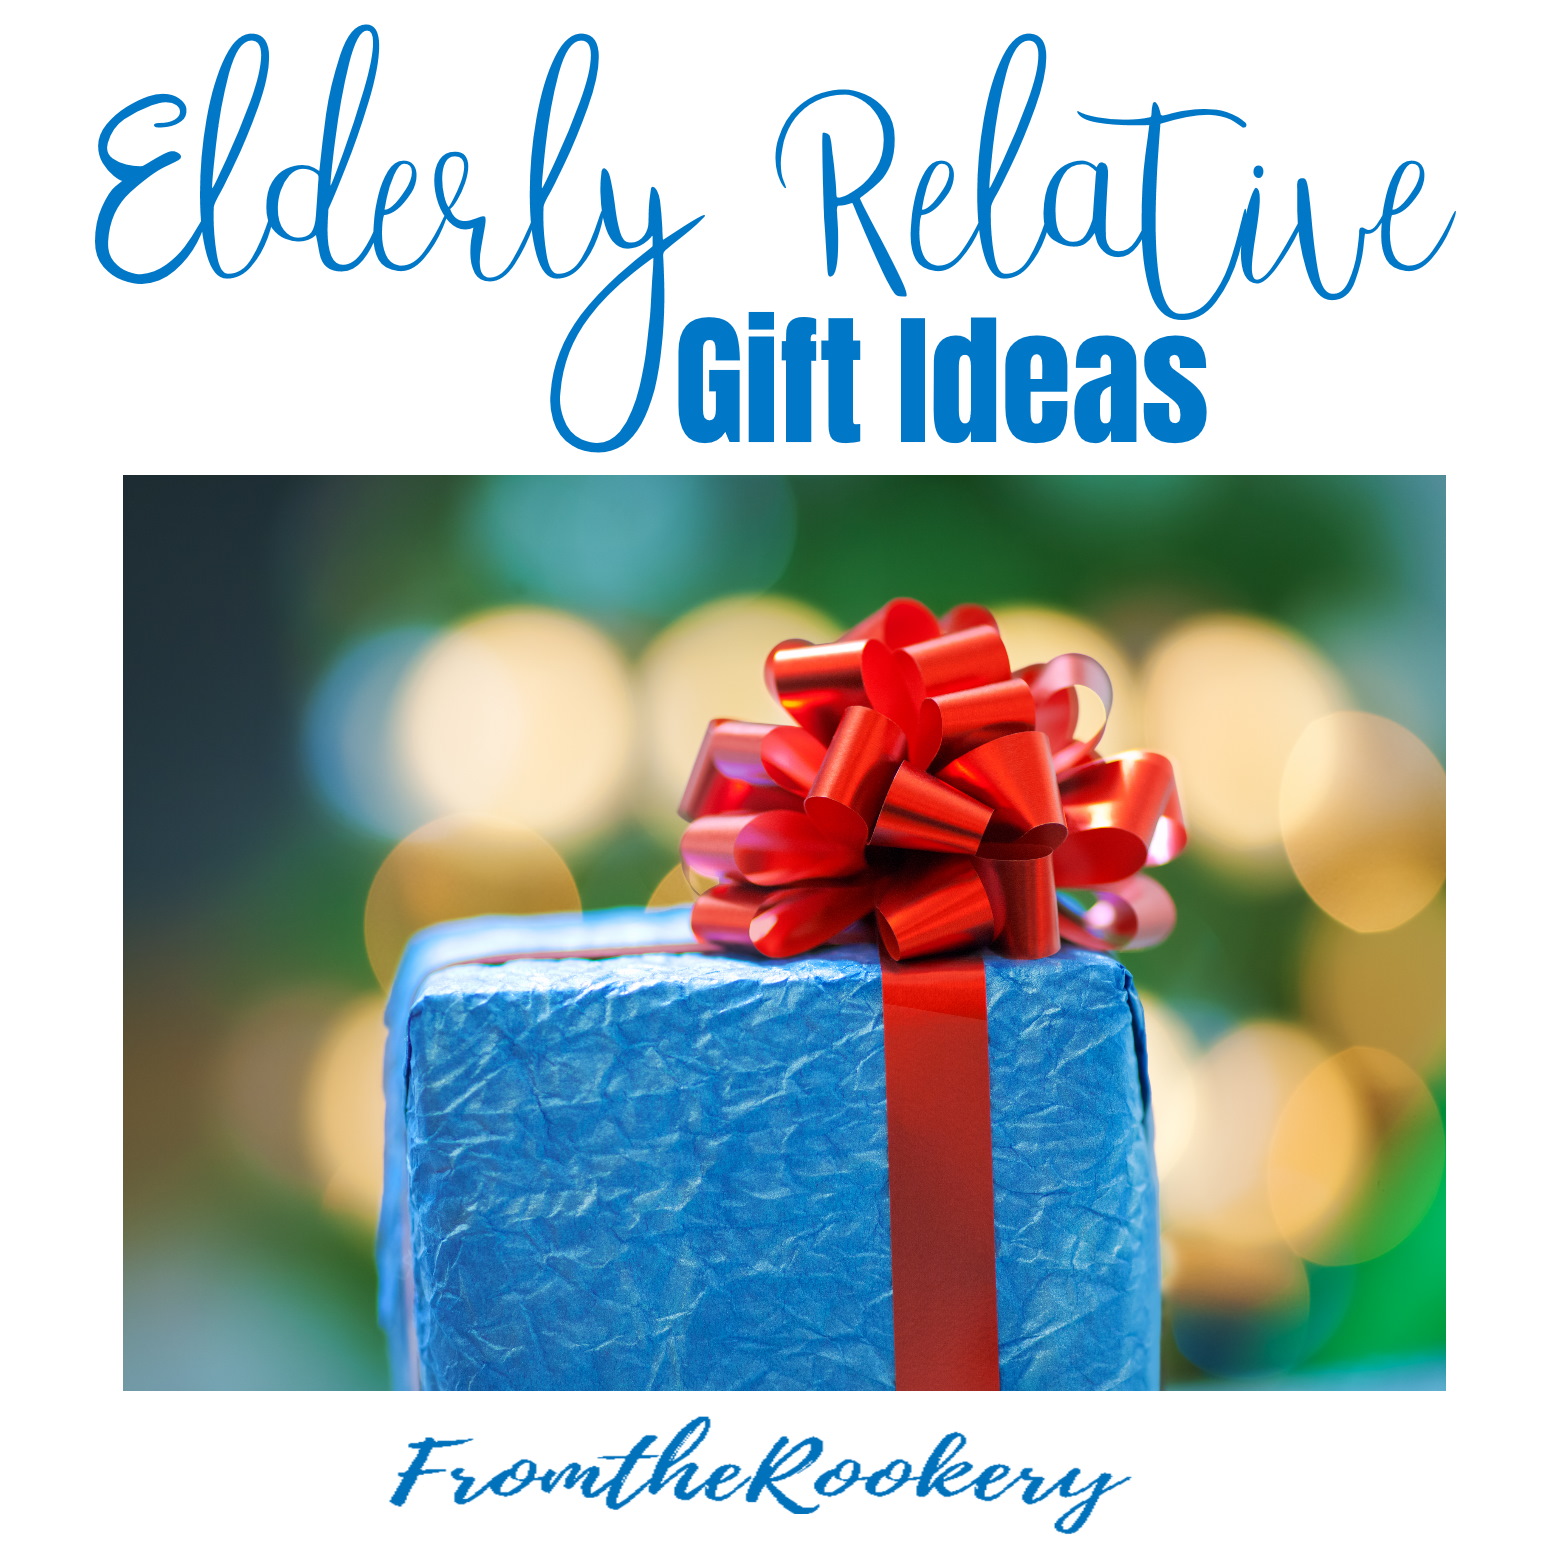 Elderly Relative gift ideas